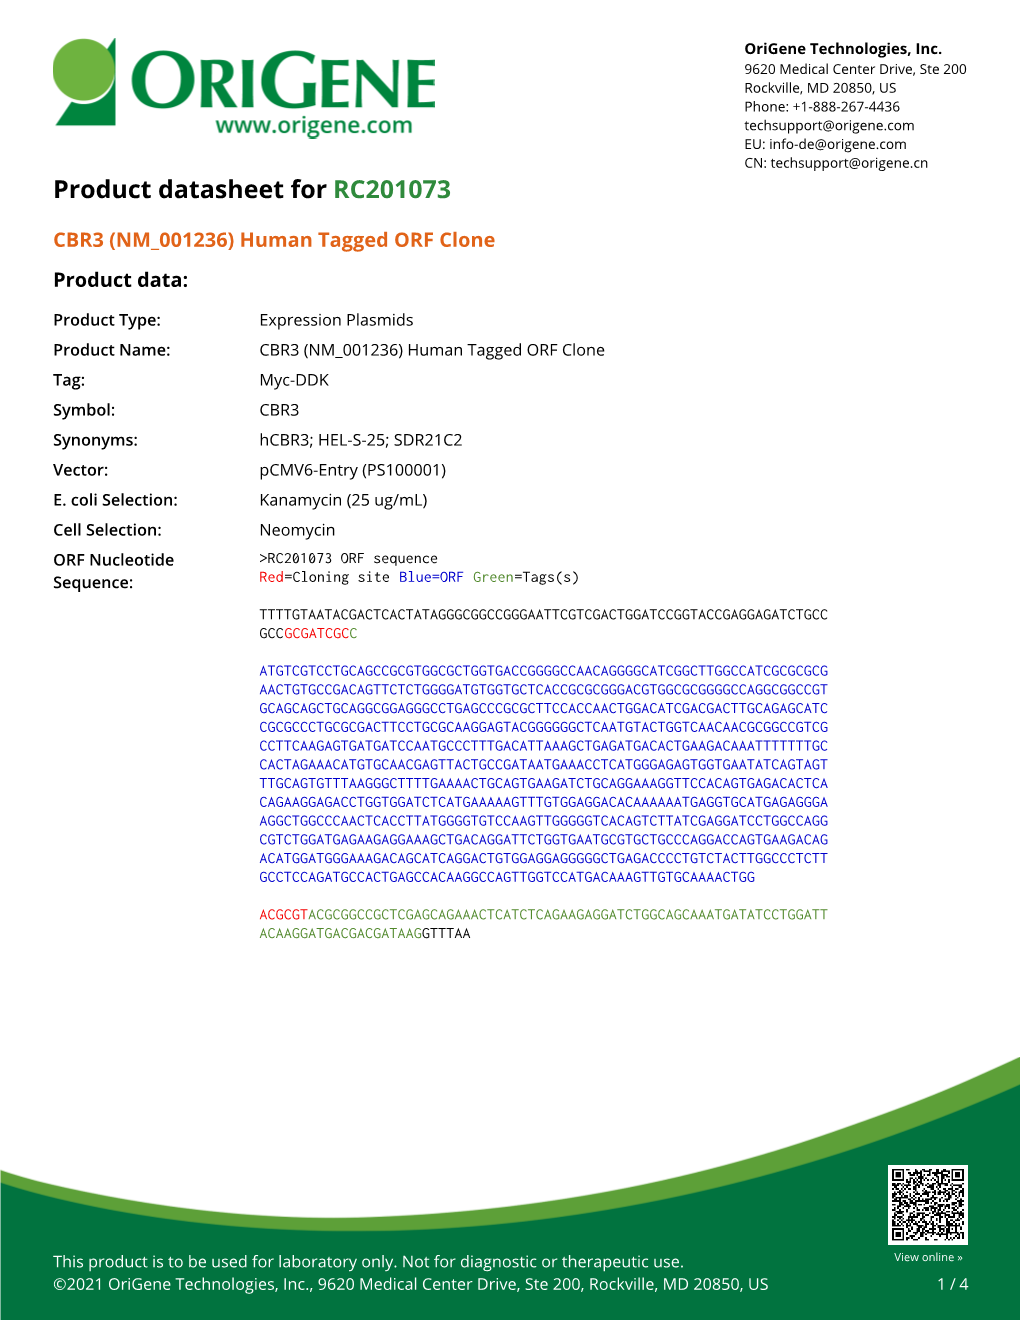 CBR3 (NM 001236) Human Tagged ORF Clone – RC201073 | Origene